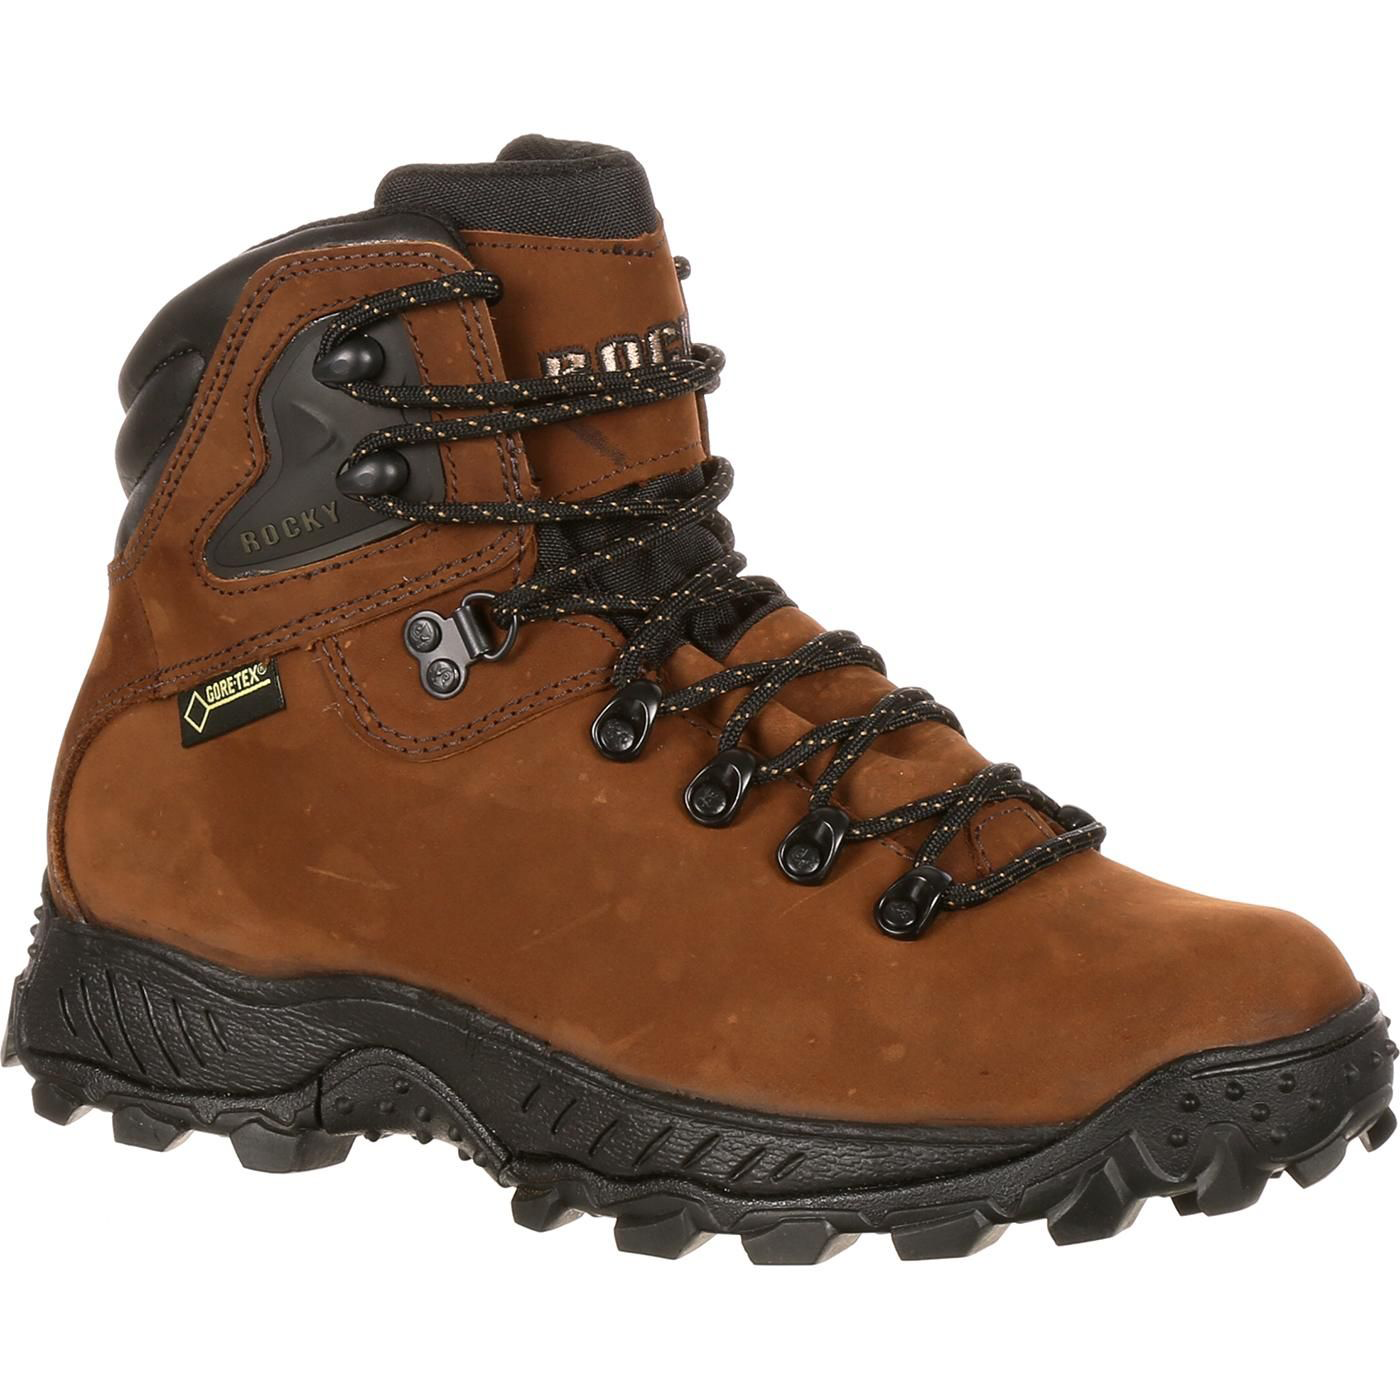 Rocky Ridgetop GORE-TEX 6"" Hiking Boots for Men - Brown - 8M